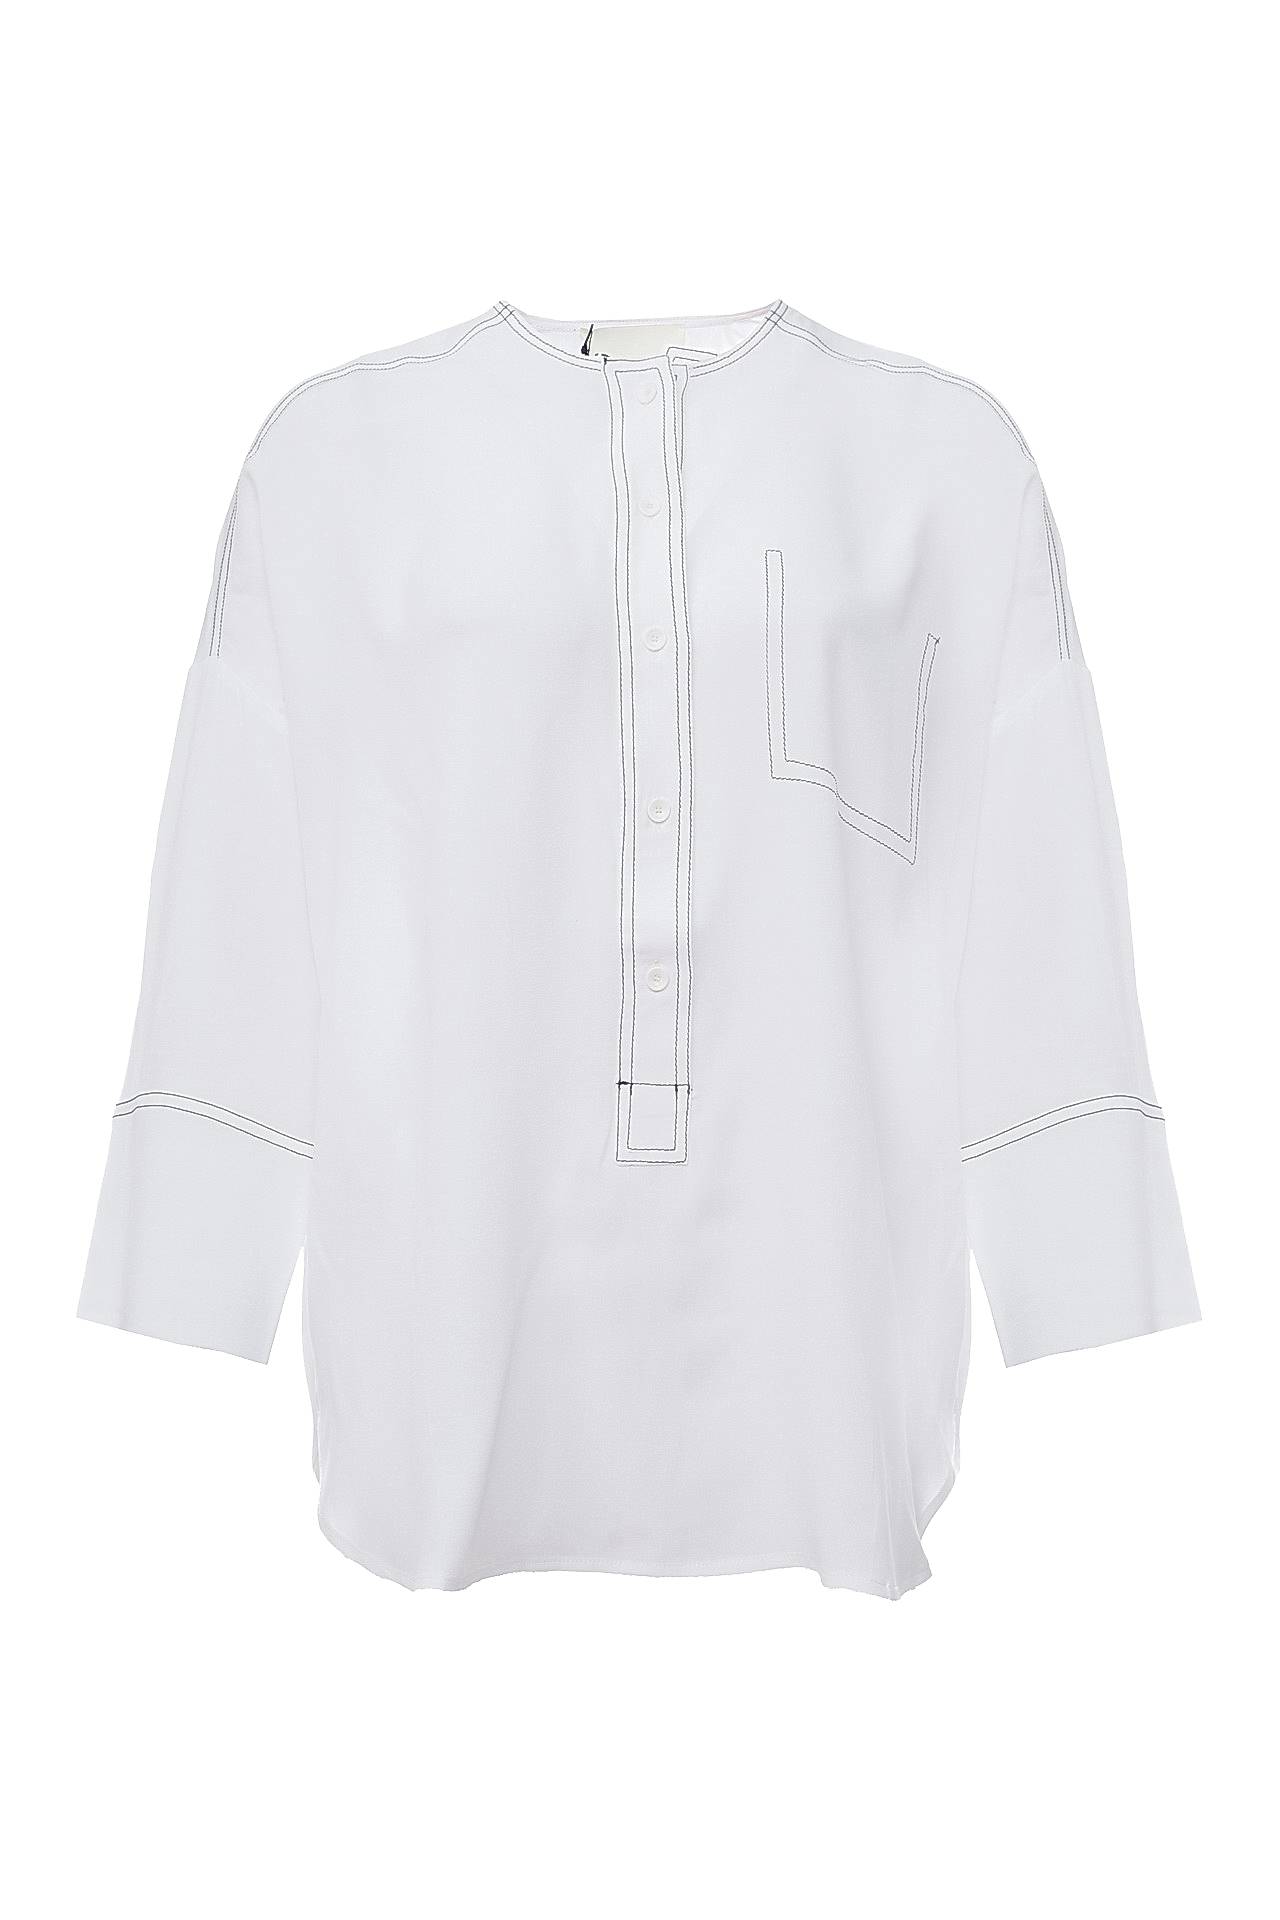 Одежда женская Рубашка 8PM (8PM62C14/17.1). Купить за 8450 руб.